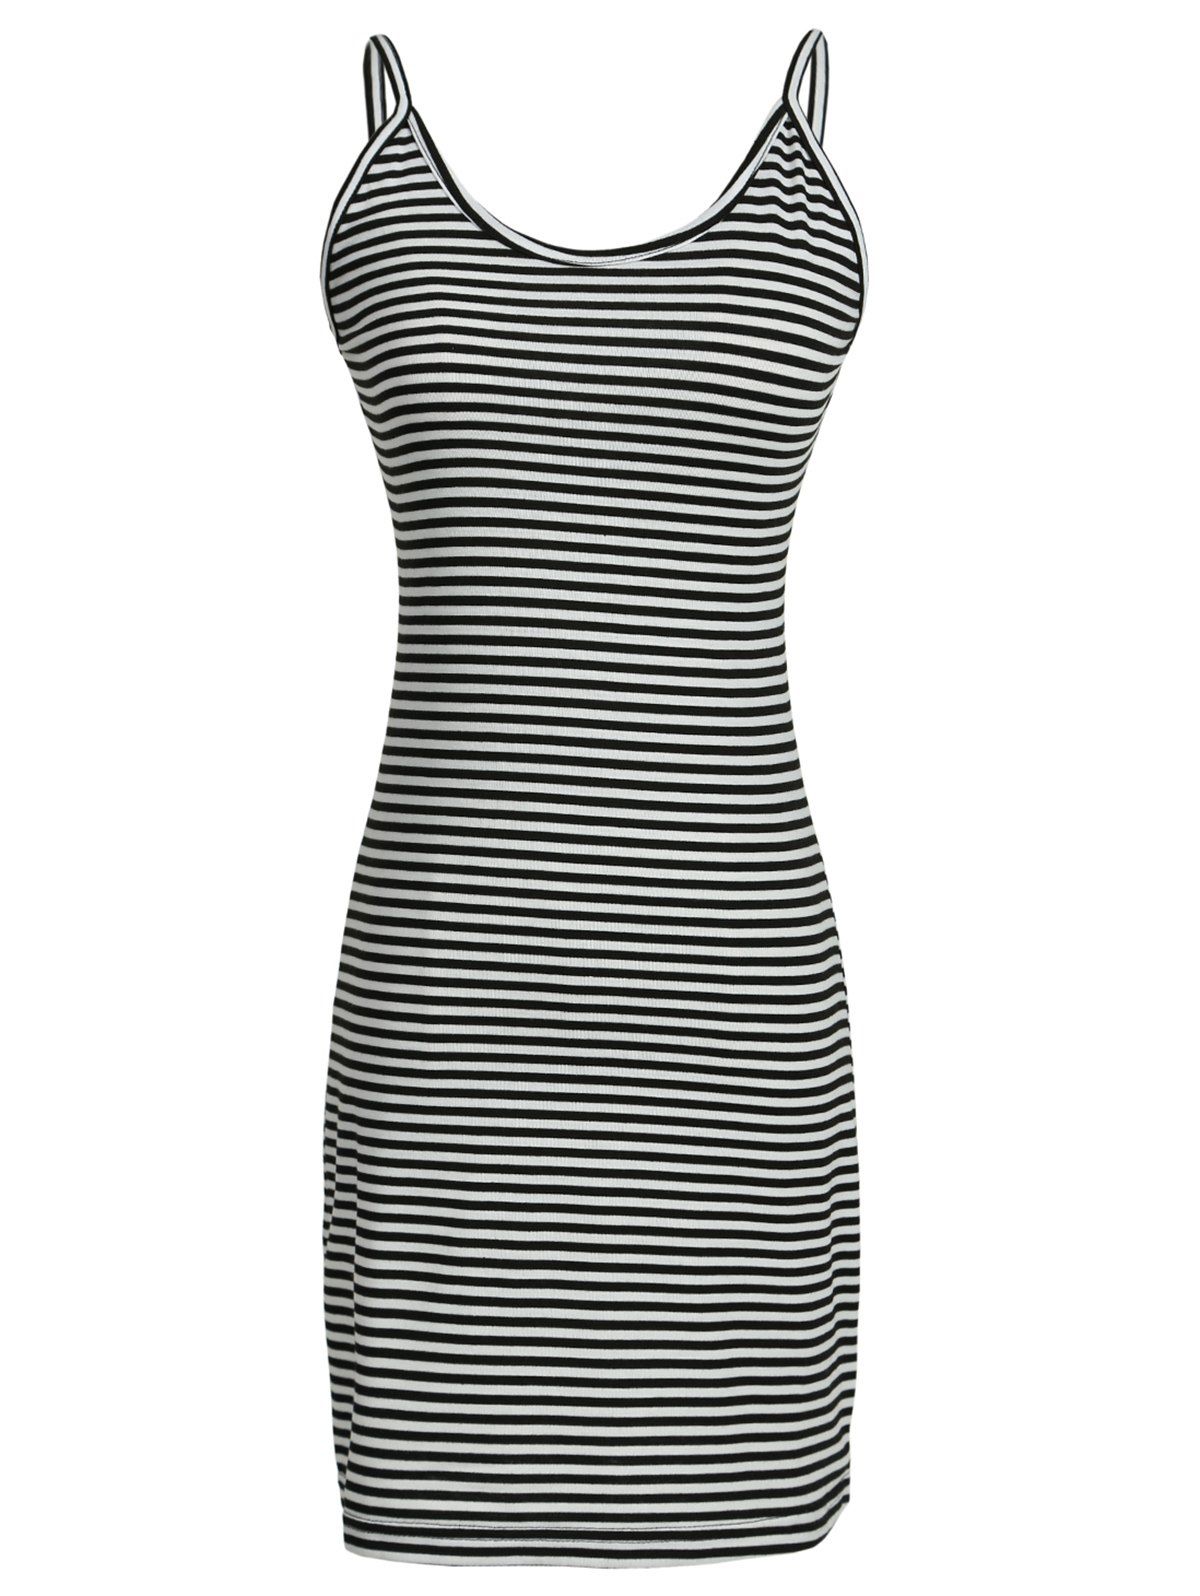 2018 Trendy Striped Sleeveless Tank Dress For Women STRIPE S In Casual ...